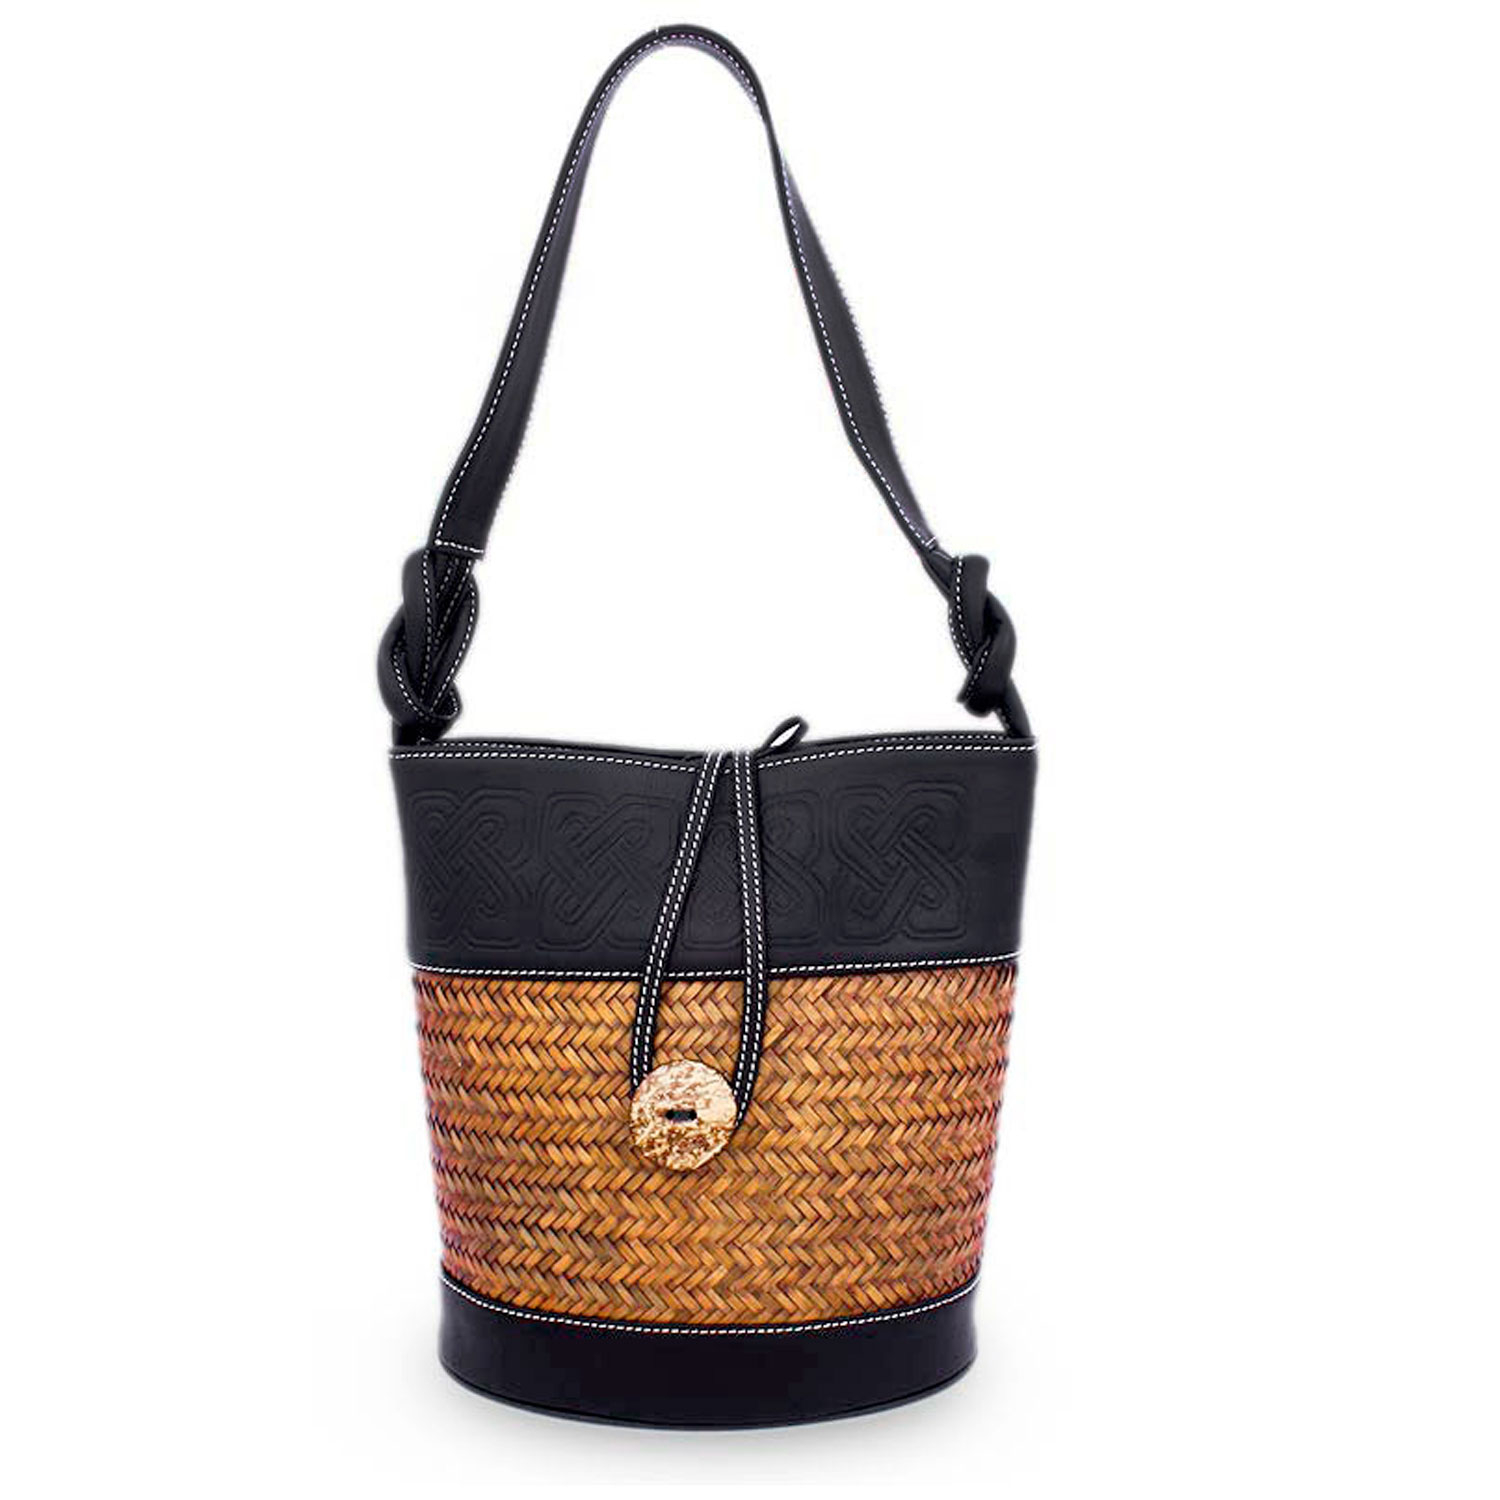 Palm and leather accent handbag - Black Maya Equilibrium | NOVICA